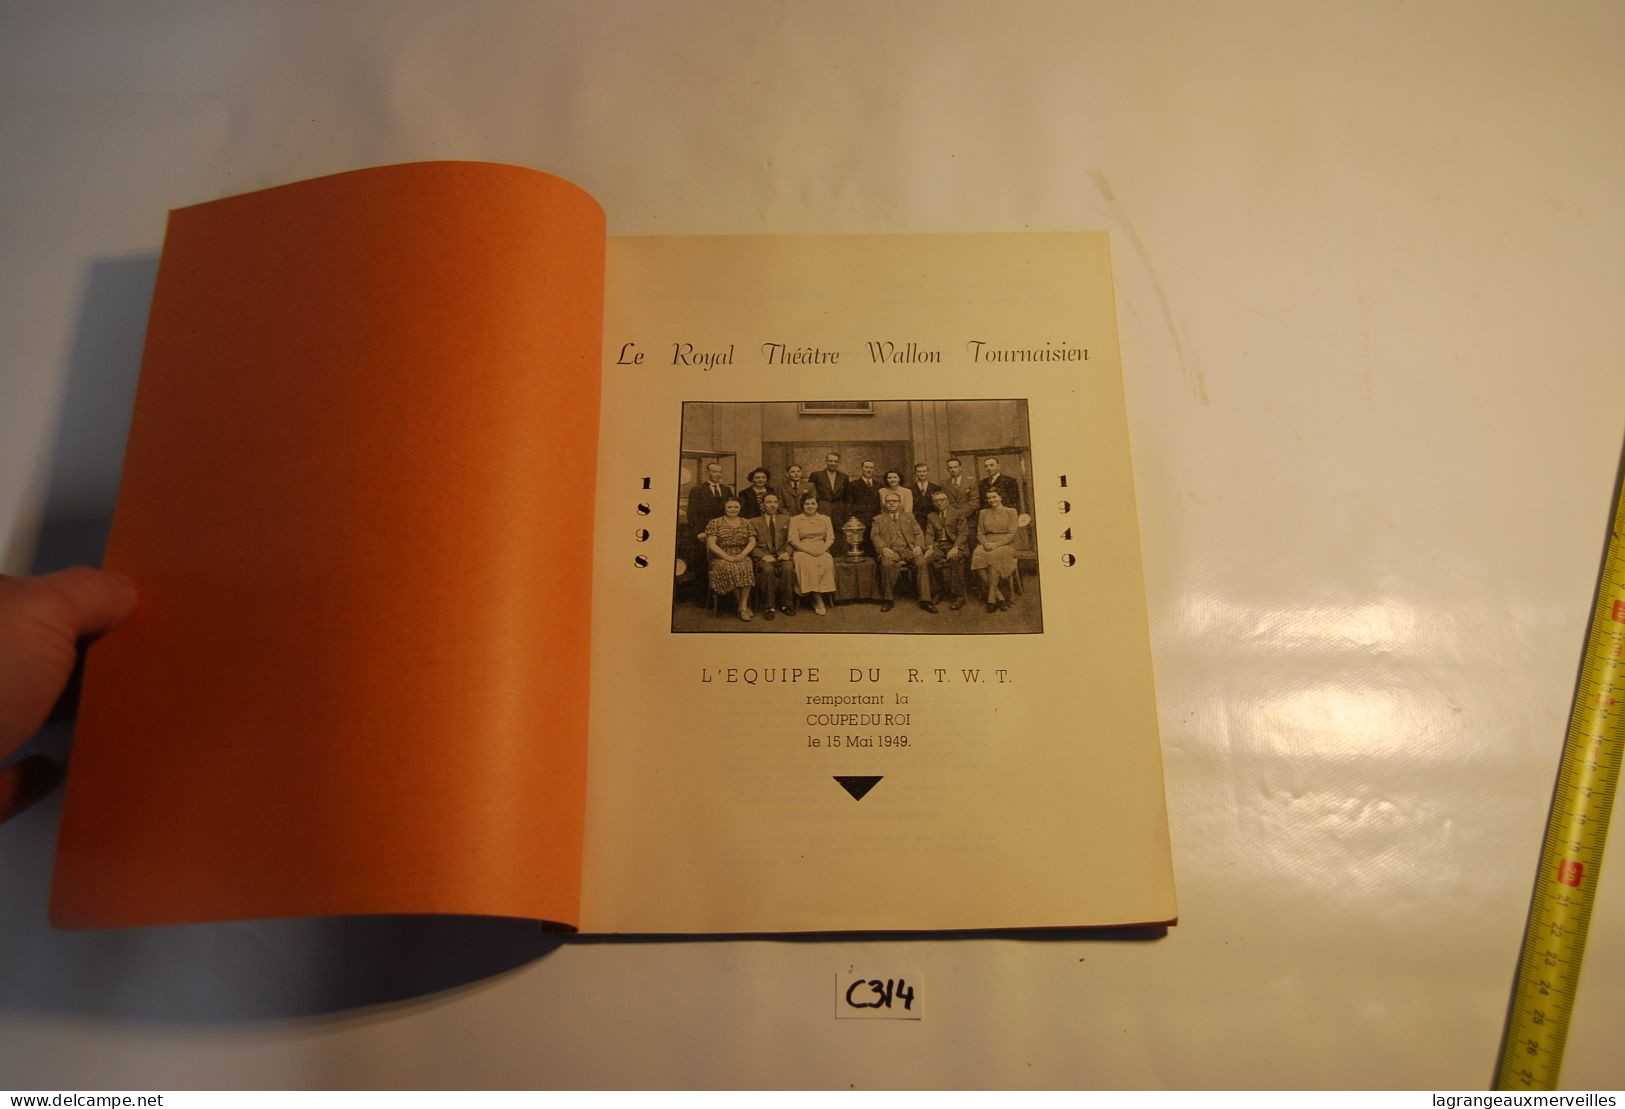 C314 Livret - Les Trois Grands - Edgard Hespel - Tournai - 1949 - Rare Book - Autores Franceses